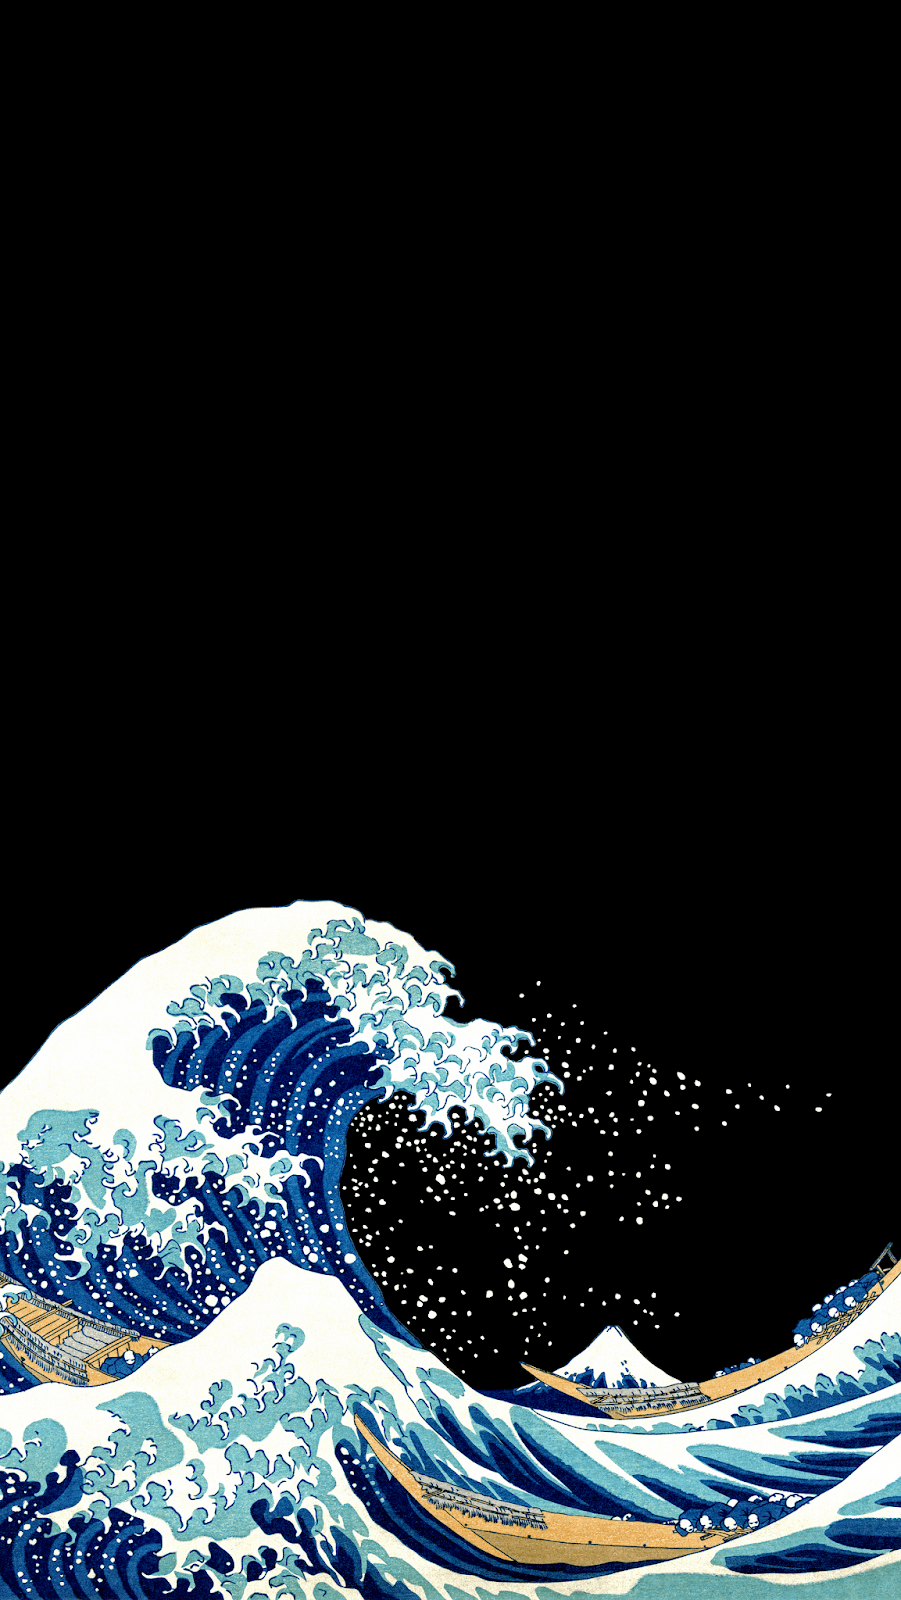 The great wave off kanagawa is a woodblock print by hokusai - Wave, The Great Wave off Kanagawa